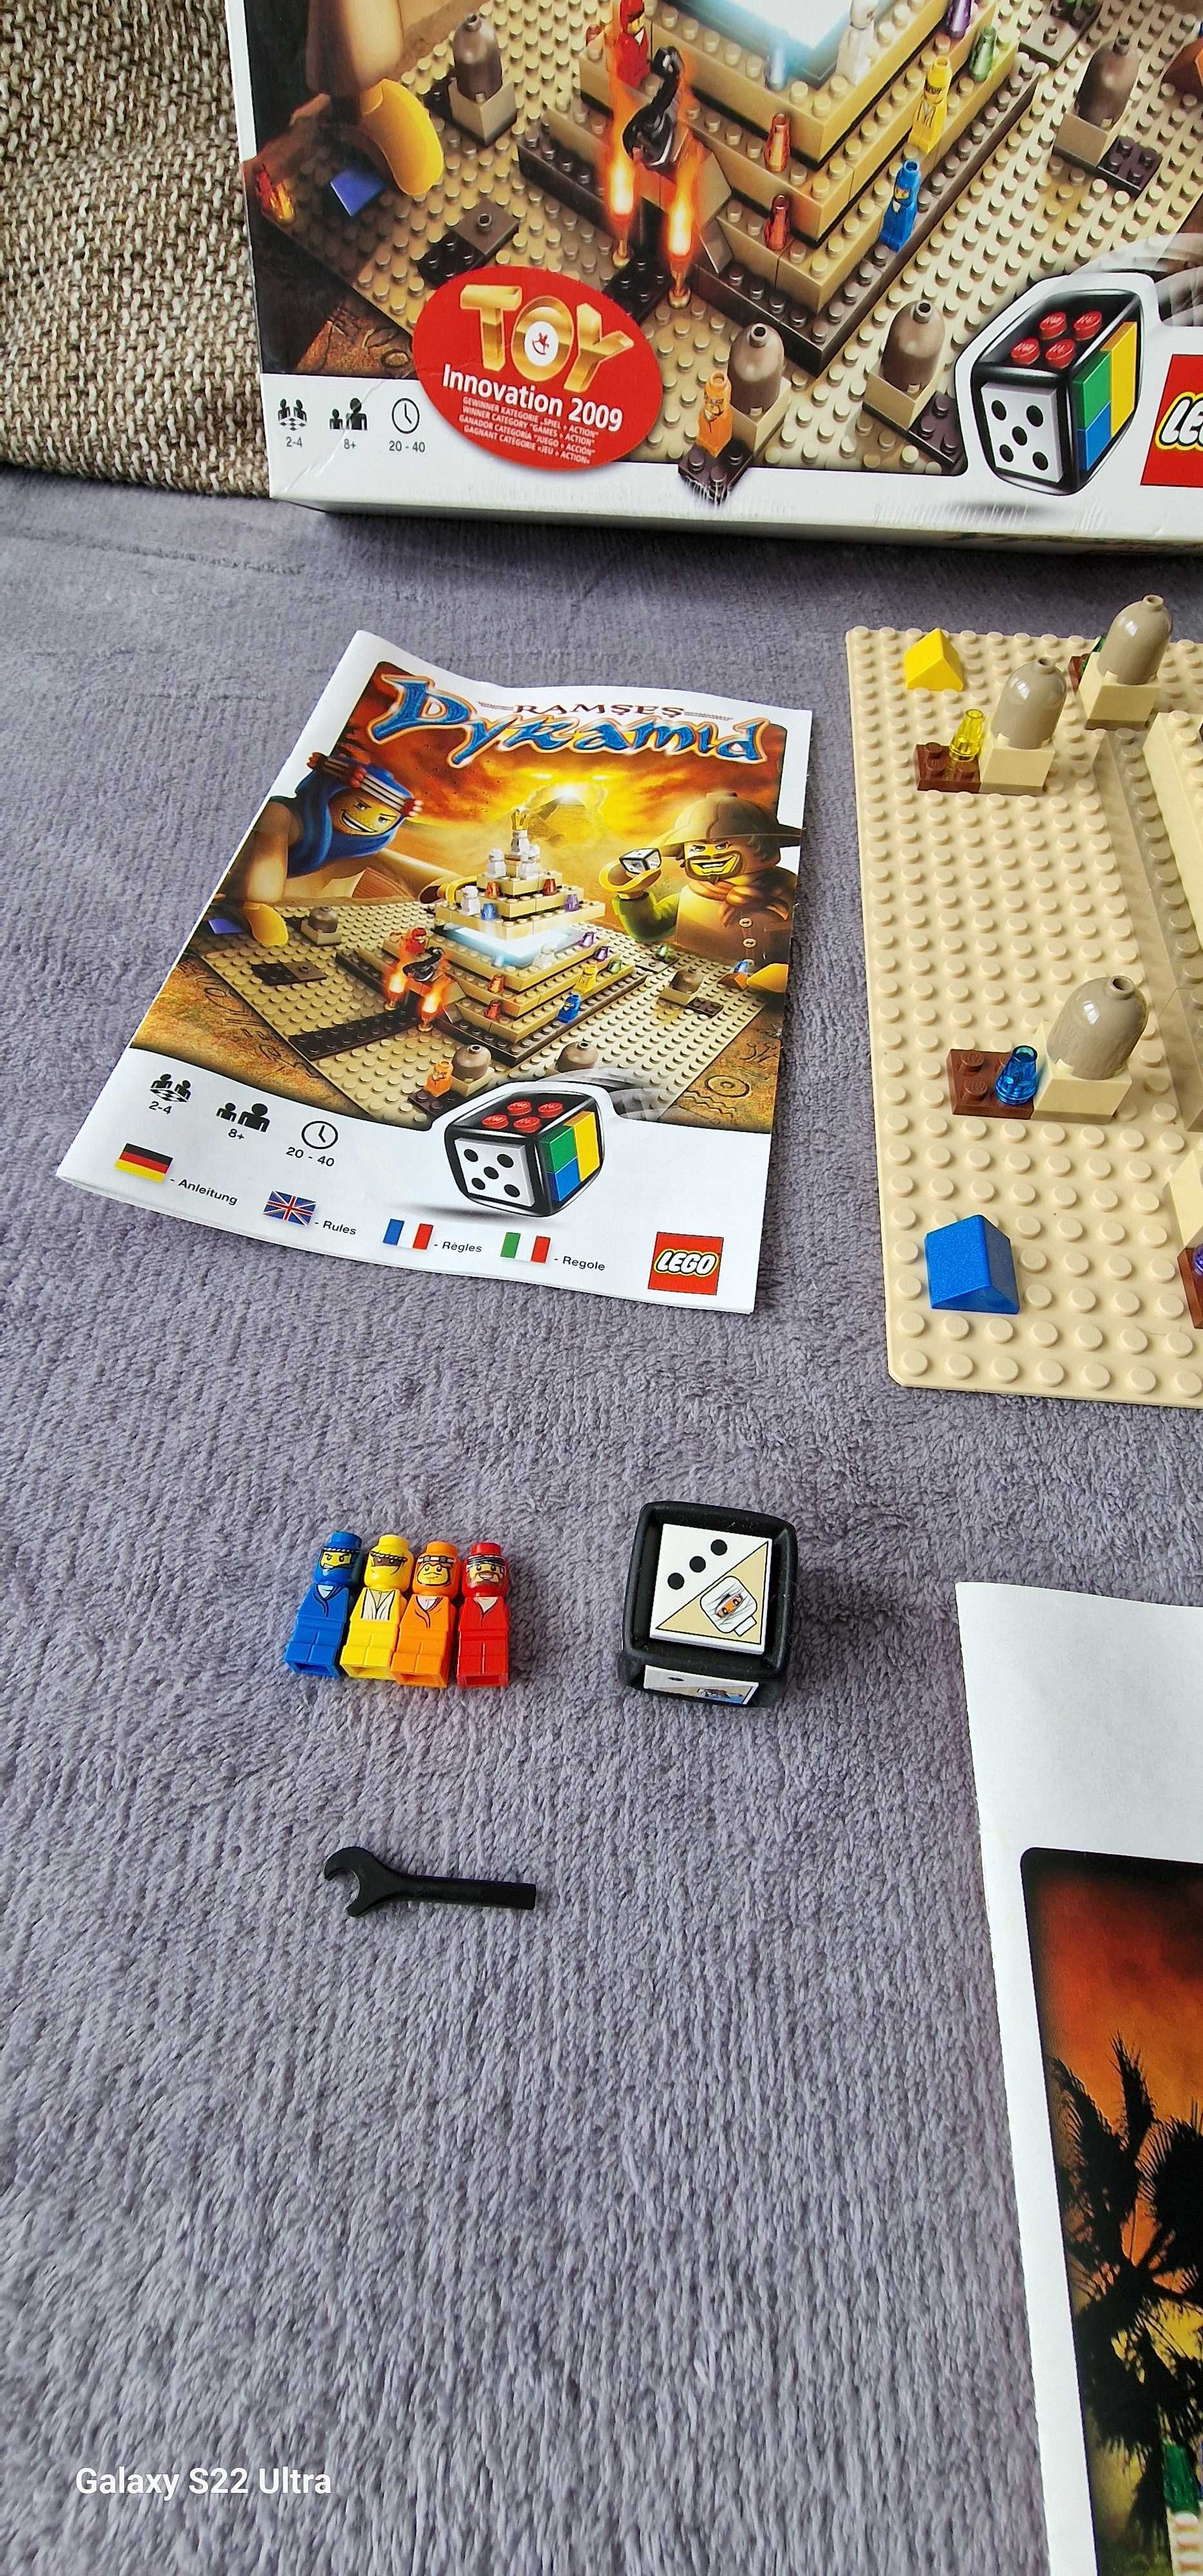 Lego 3843 - Ramses Pyramid